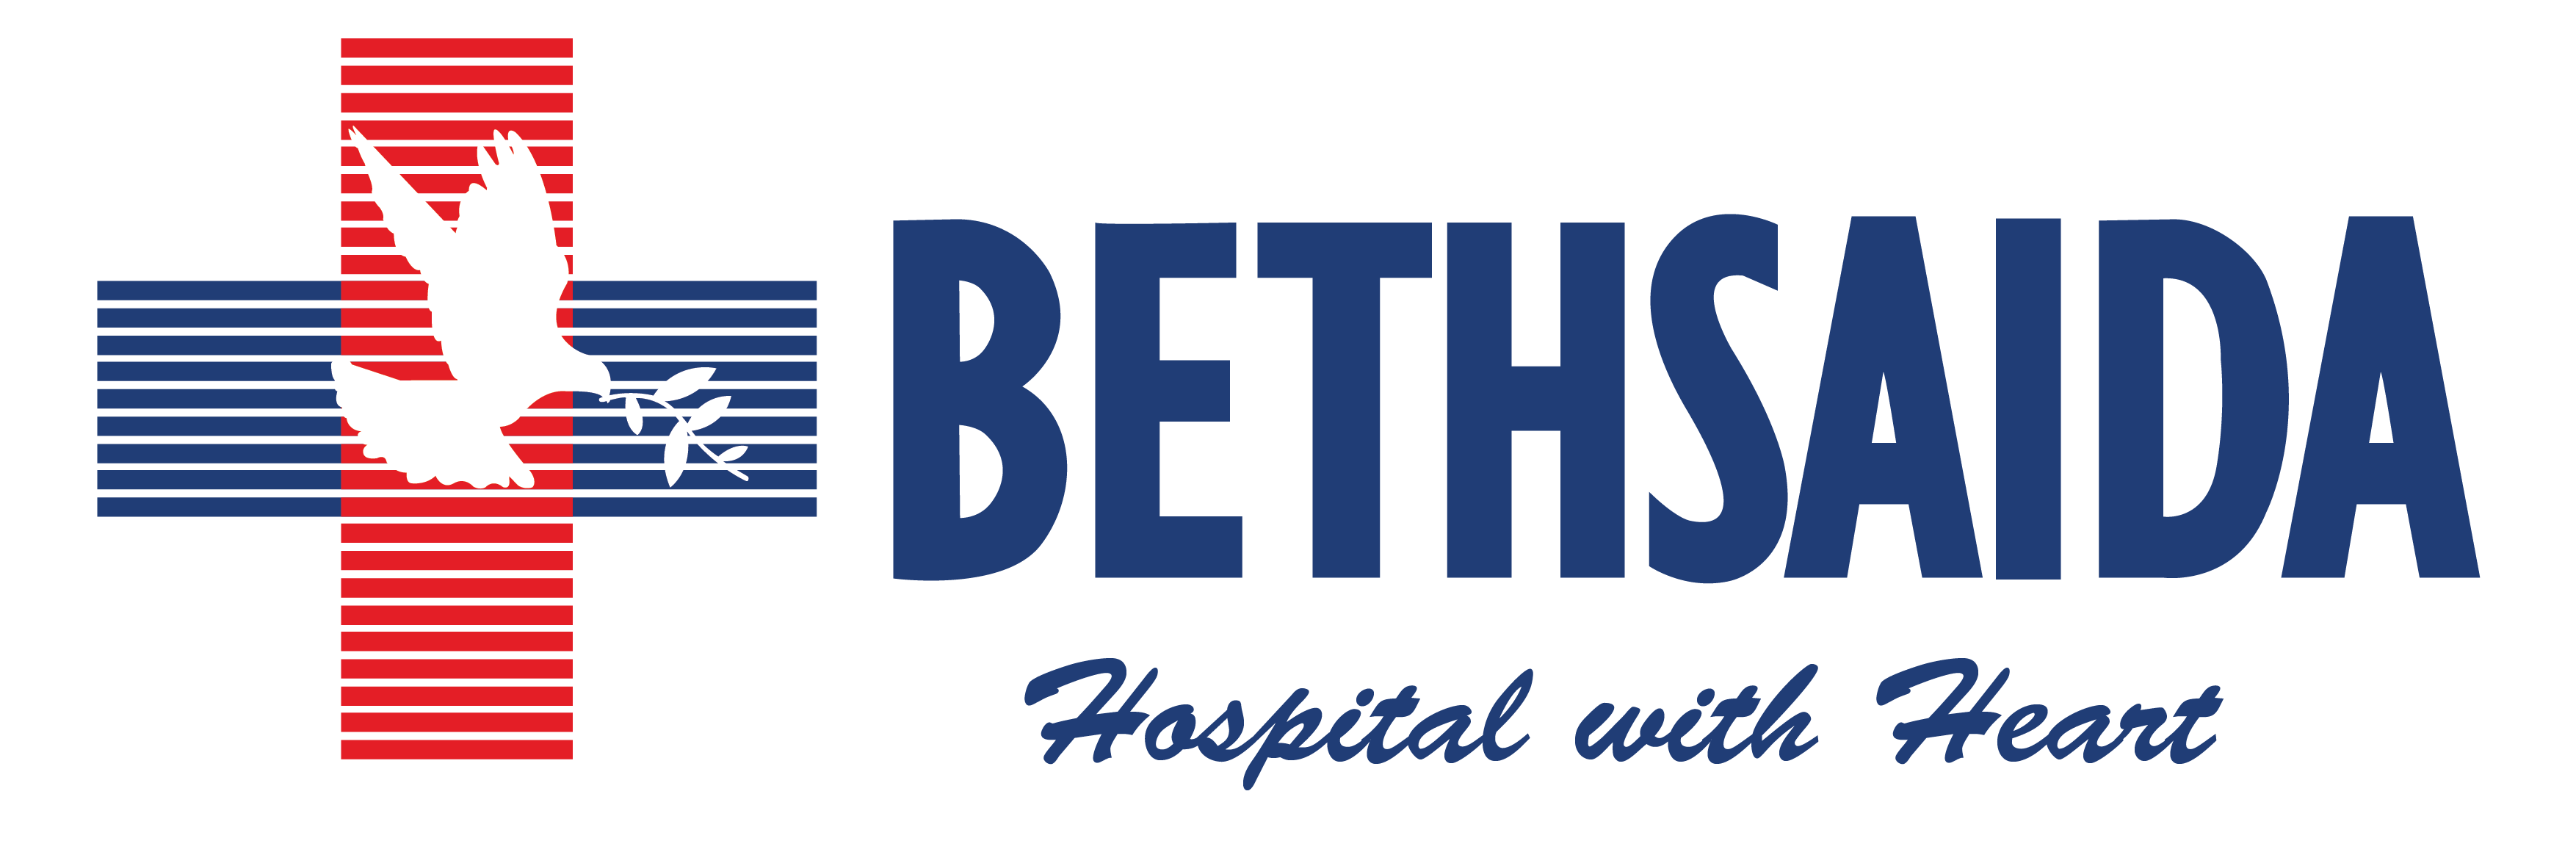 Bethsaida Hospital